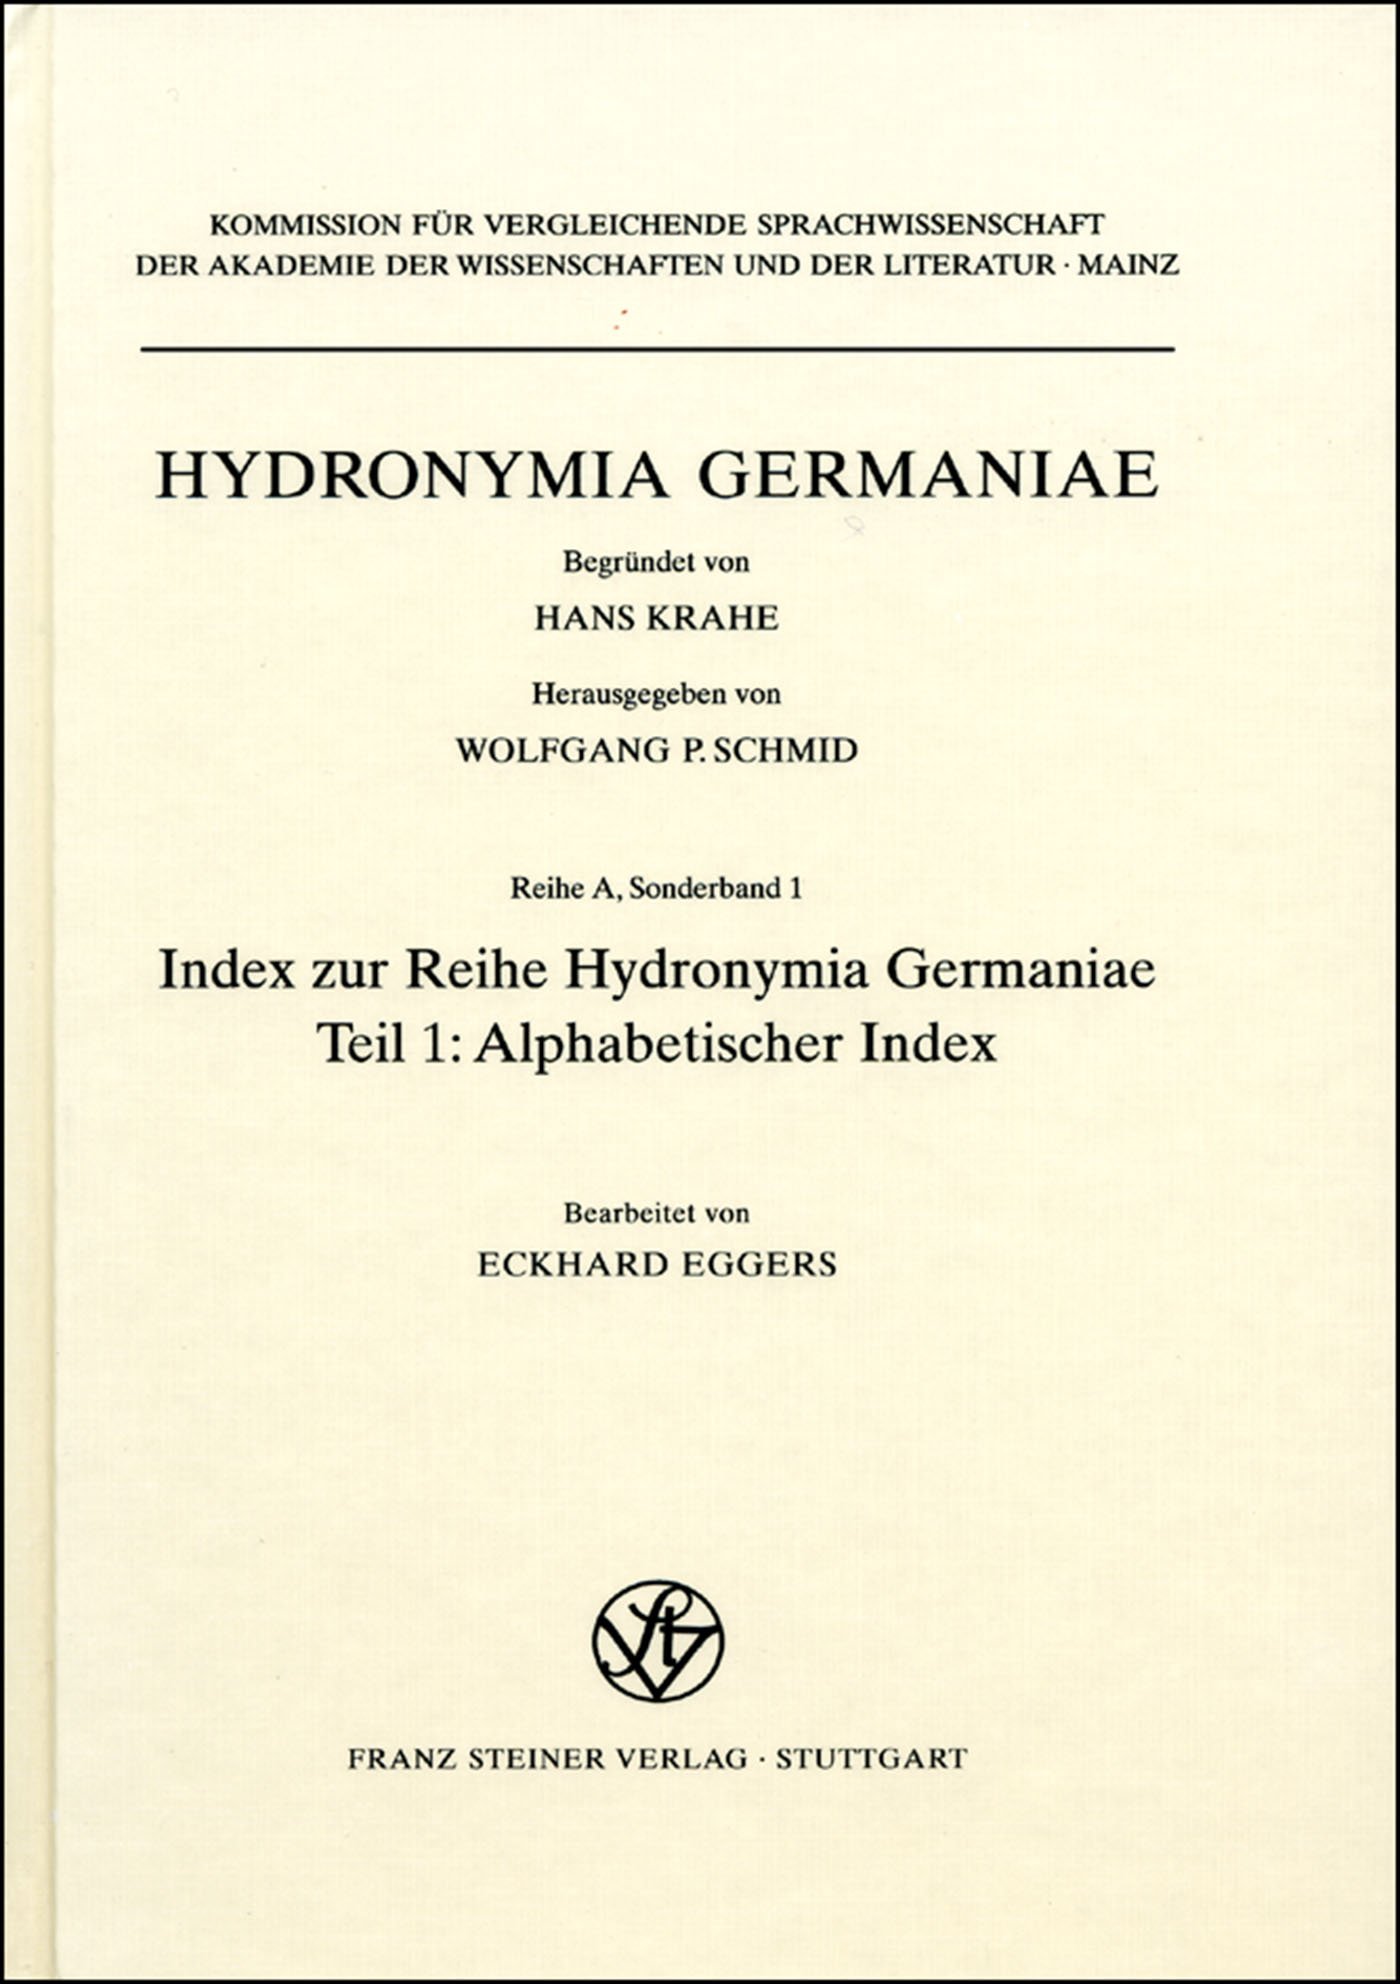 Index zur Reihe Hydronymia Germaniae